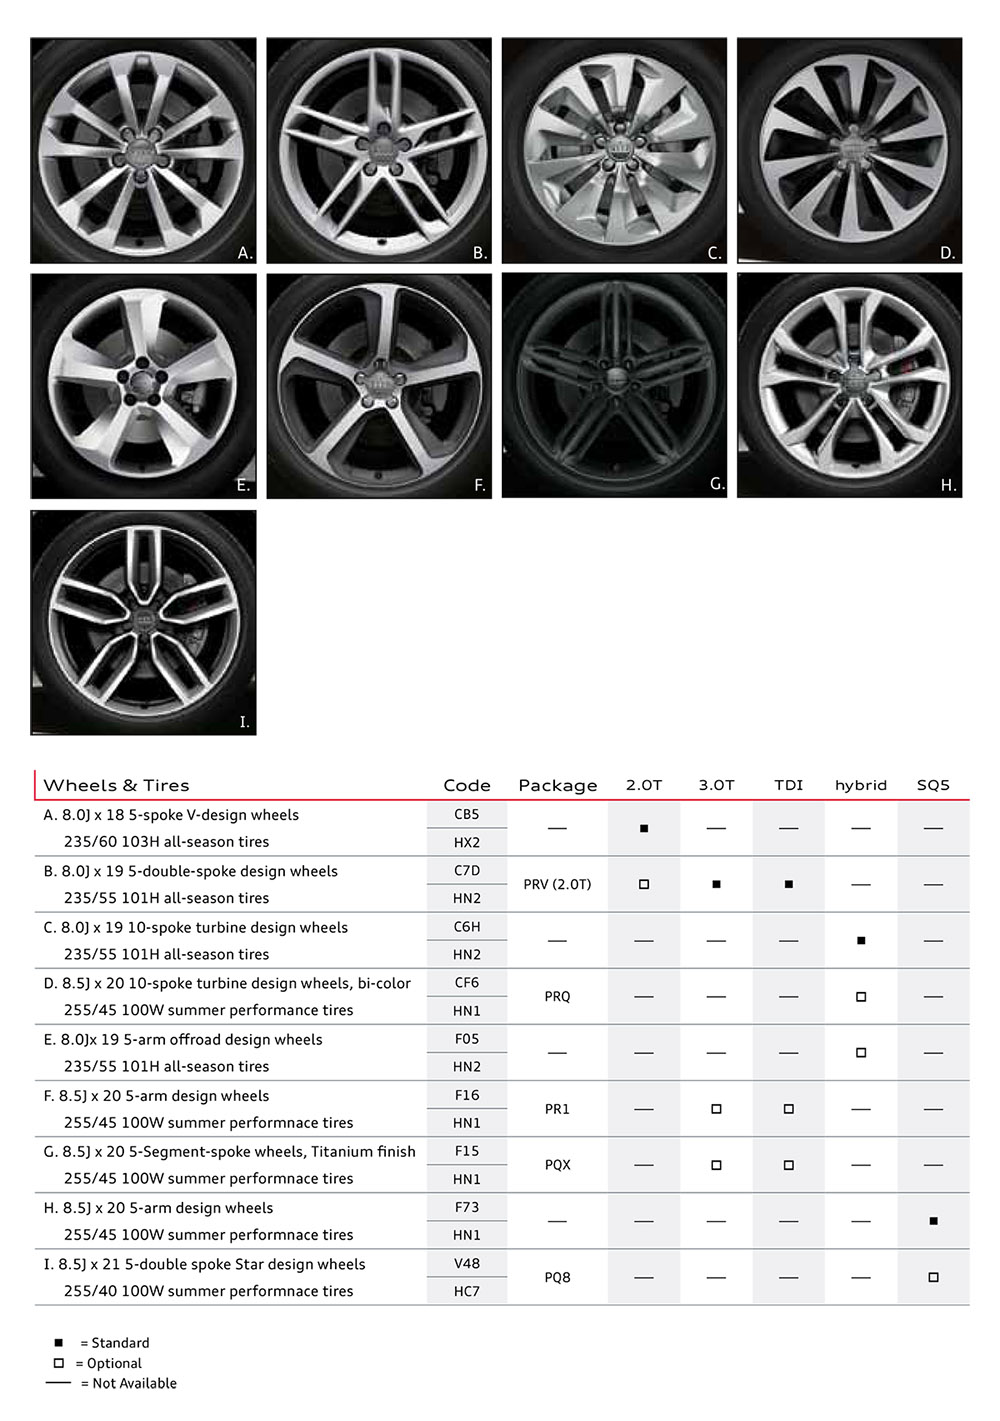 AUDI Q5 MOTORING: 2014 Audi Q5 Wheel choices.